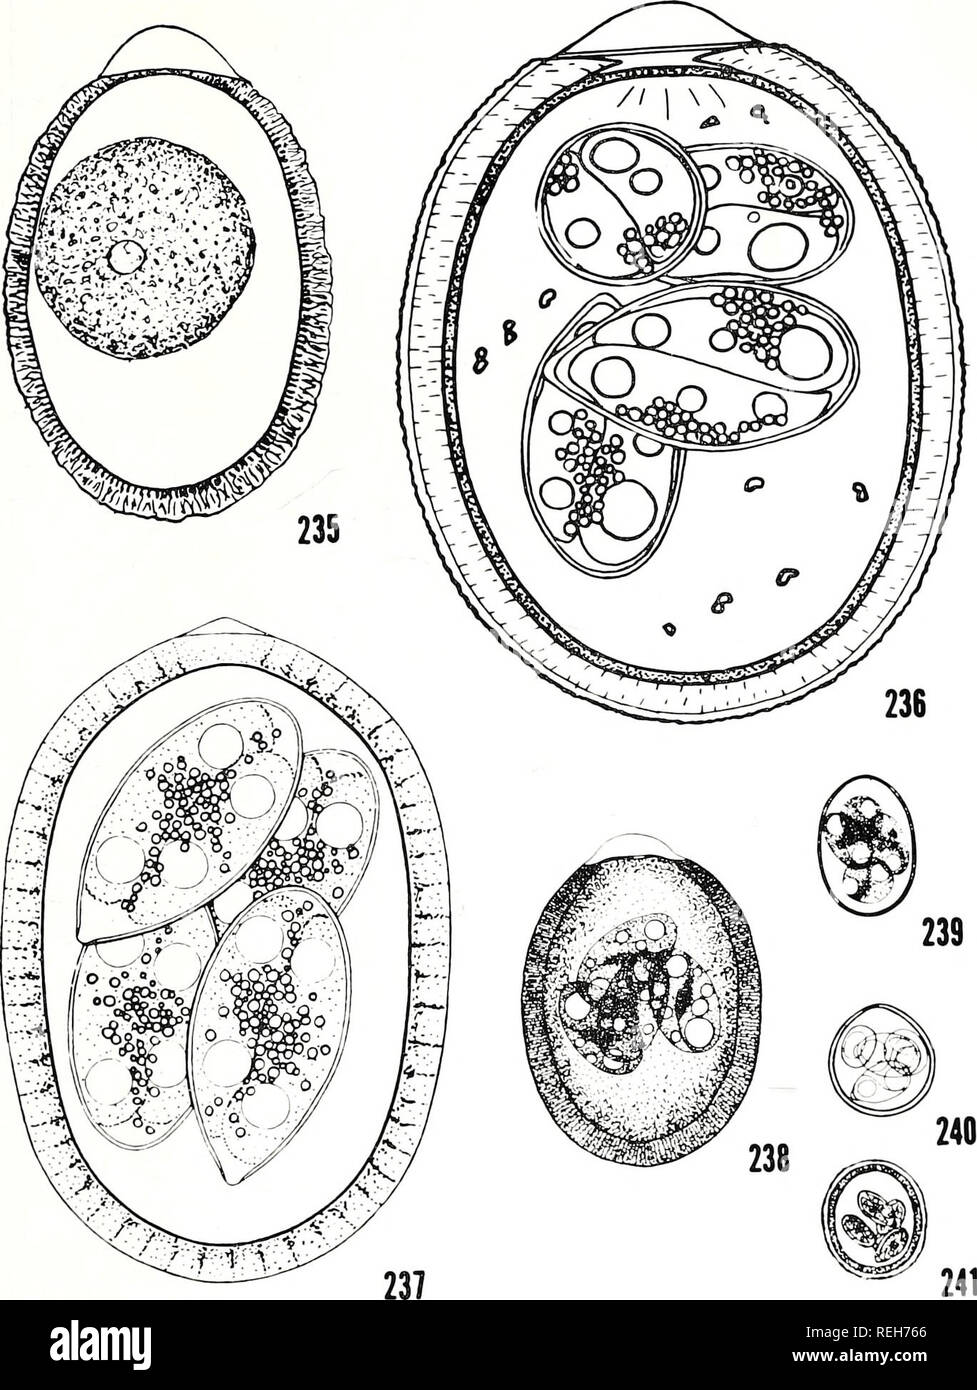 . The coccidian parasites (Protozoa, Sporozoa) of ruminants. Coccidia; Ruminants. 259. Plate 56 Figs. 235-23S. E. intricata Spiegl, 1925 from Ovis aries. Fig. 235. Sporulated oocyst (from Balozet, 1932a). X 1007. Fig. 236. Sporulated oocyst (from Shah, 1963). X 1739. Fig. 237. Sporulated oocyst (from Joyner e1 al., 1966). X 14S7. Fig. 23S. Sporulated oocyst (from Chevalier, 1965). X 732. Figs. 239-241. E. parva Kotlan, Mocsy and Vajda, 1929. Fig. 239. Sporulated oocyst from Ovis aries (from Chevalier, 1965). X 732. Fig. 240. Sporulated oocyst from Ca/pra hircus (from Chevalier, 1966). X 641. F Stock Photo